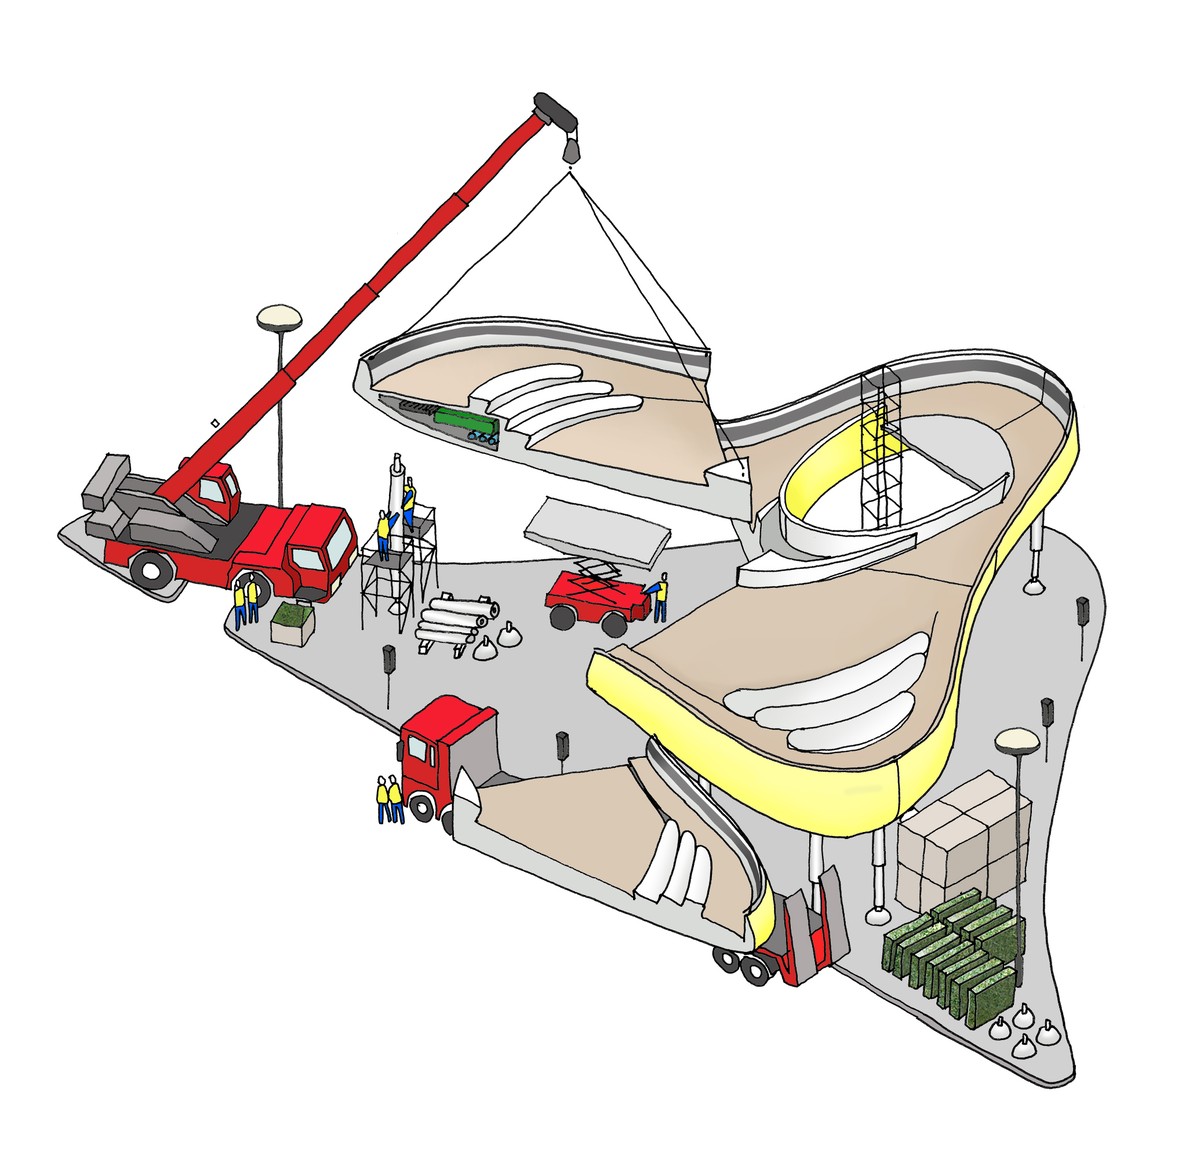 Sketch illustrating construction methodology